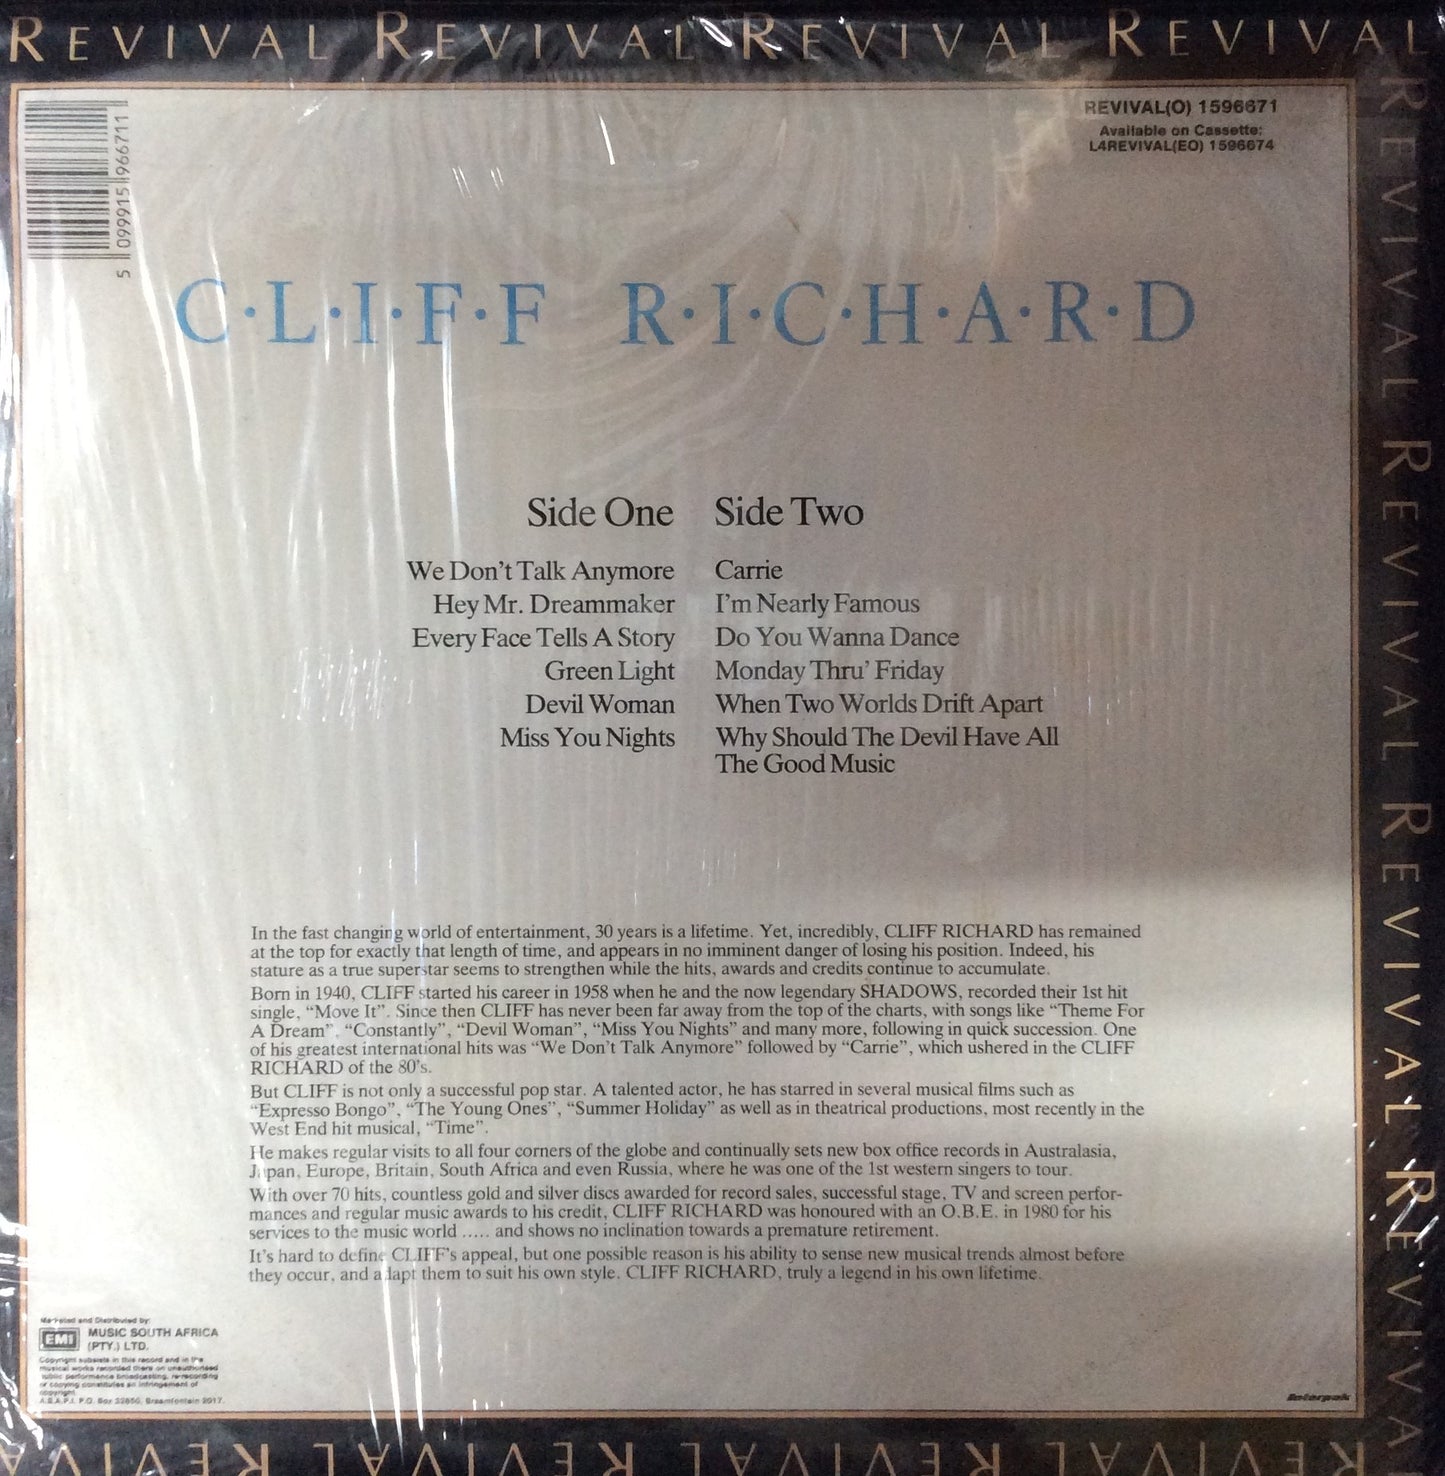 Cliff Richard - Revival Series